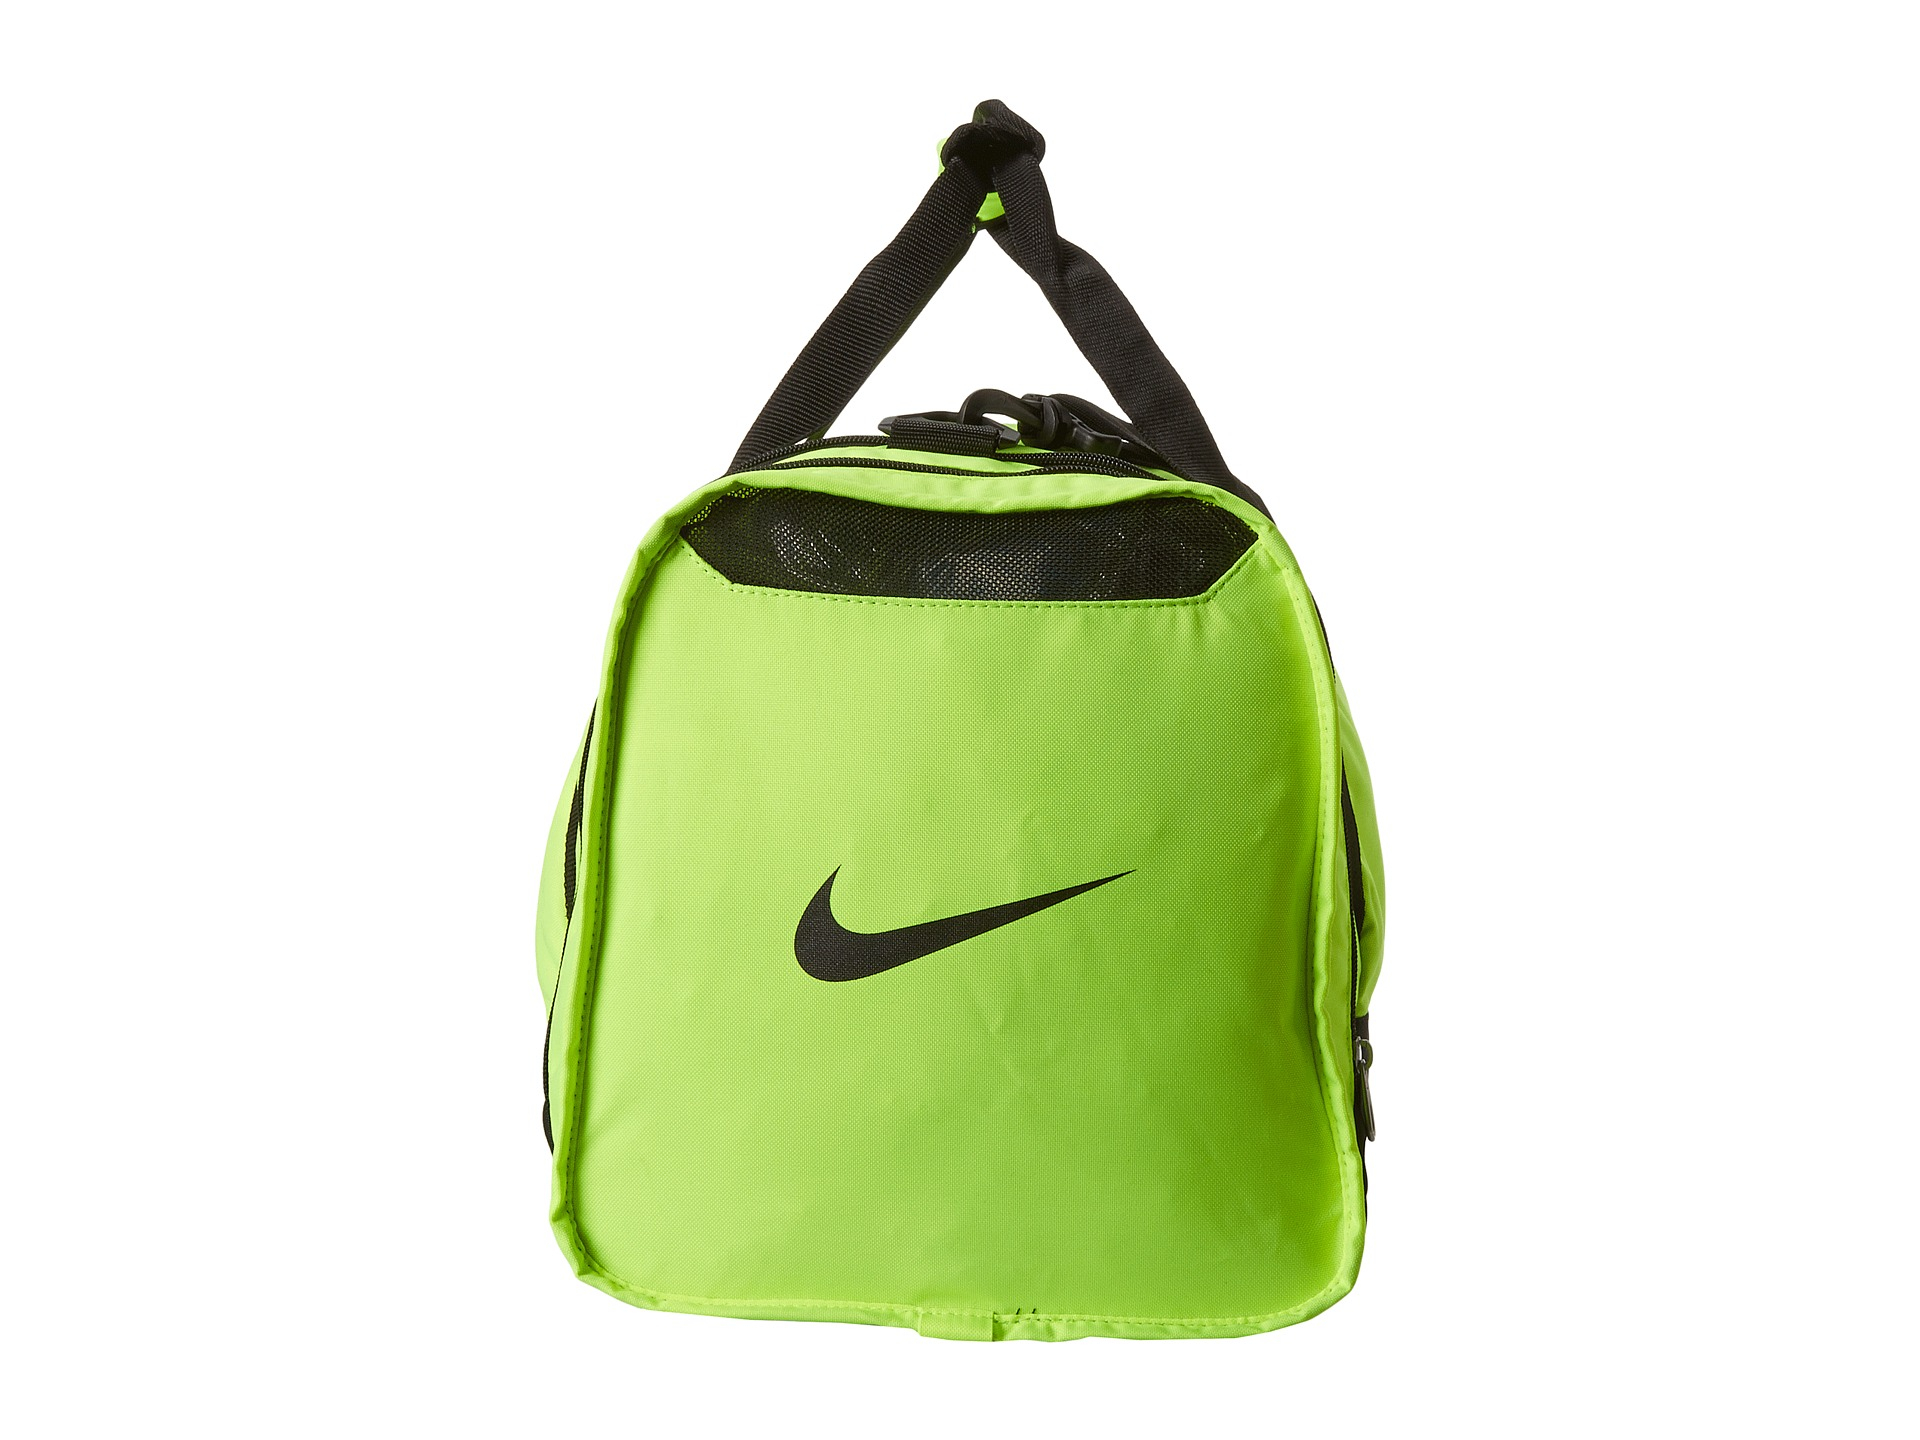 Nike Brasilia 6 Small Duffel in Green - Lyst